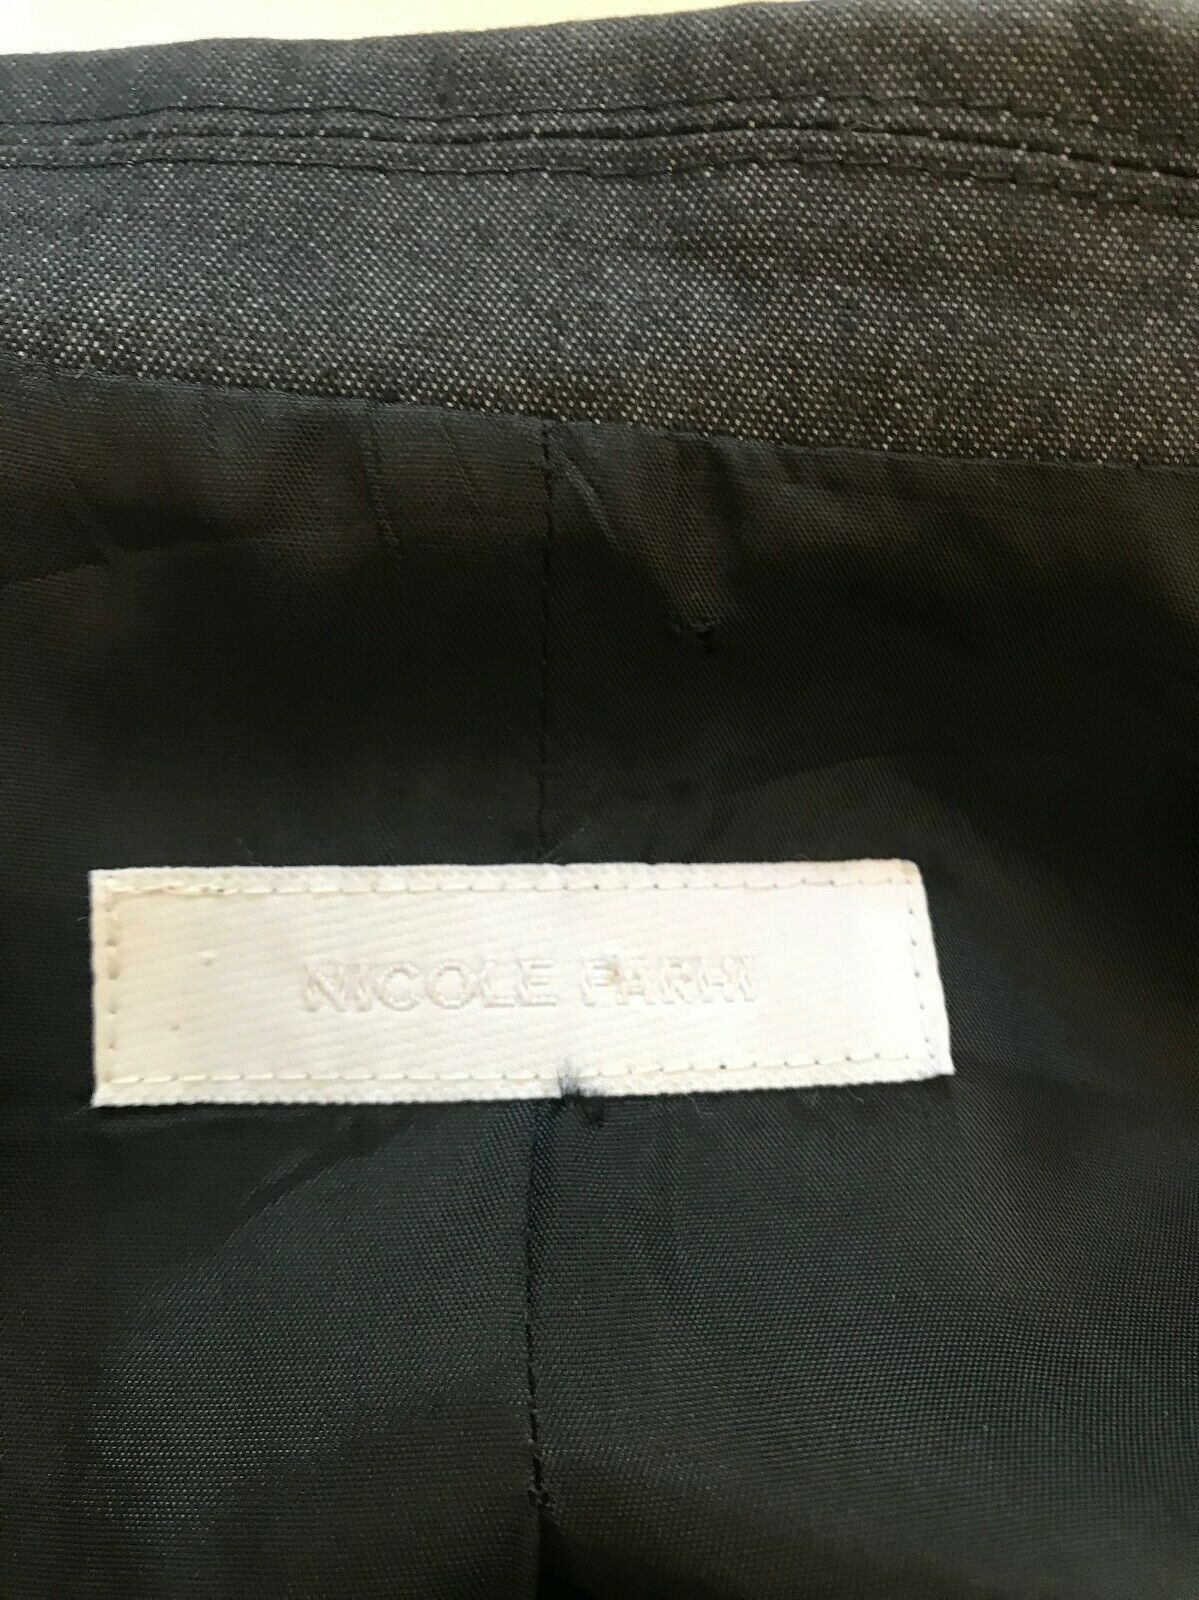 Nicole Farhi Grey Vintage Cotton Mix Bardot Dress & Jacket UK 8/10 US 4/6 EU 36/38 Timeless Fashions